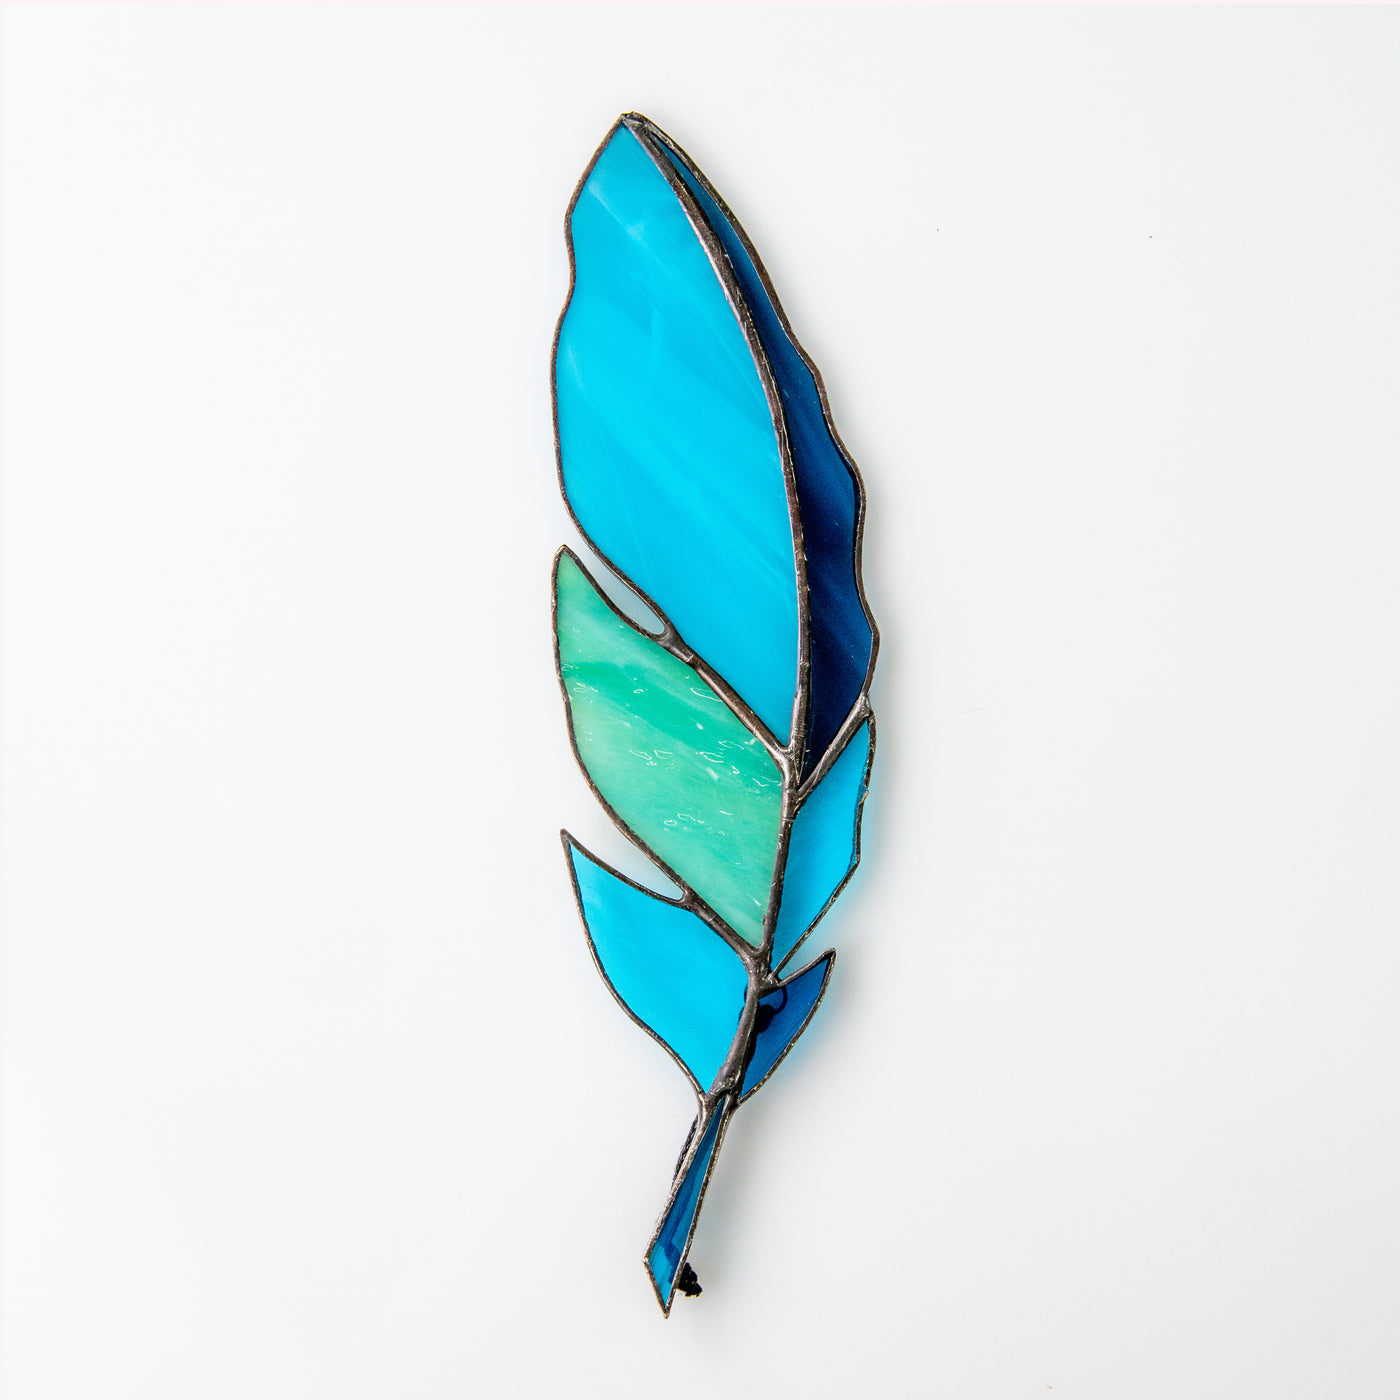 Aquamarine stained glass feather suncatcher for window decoration